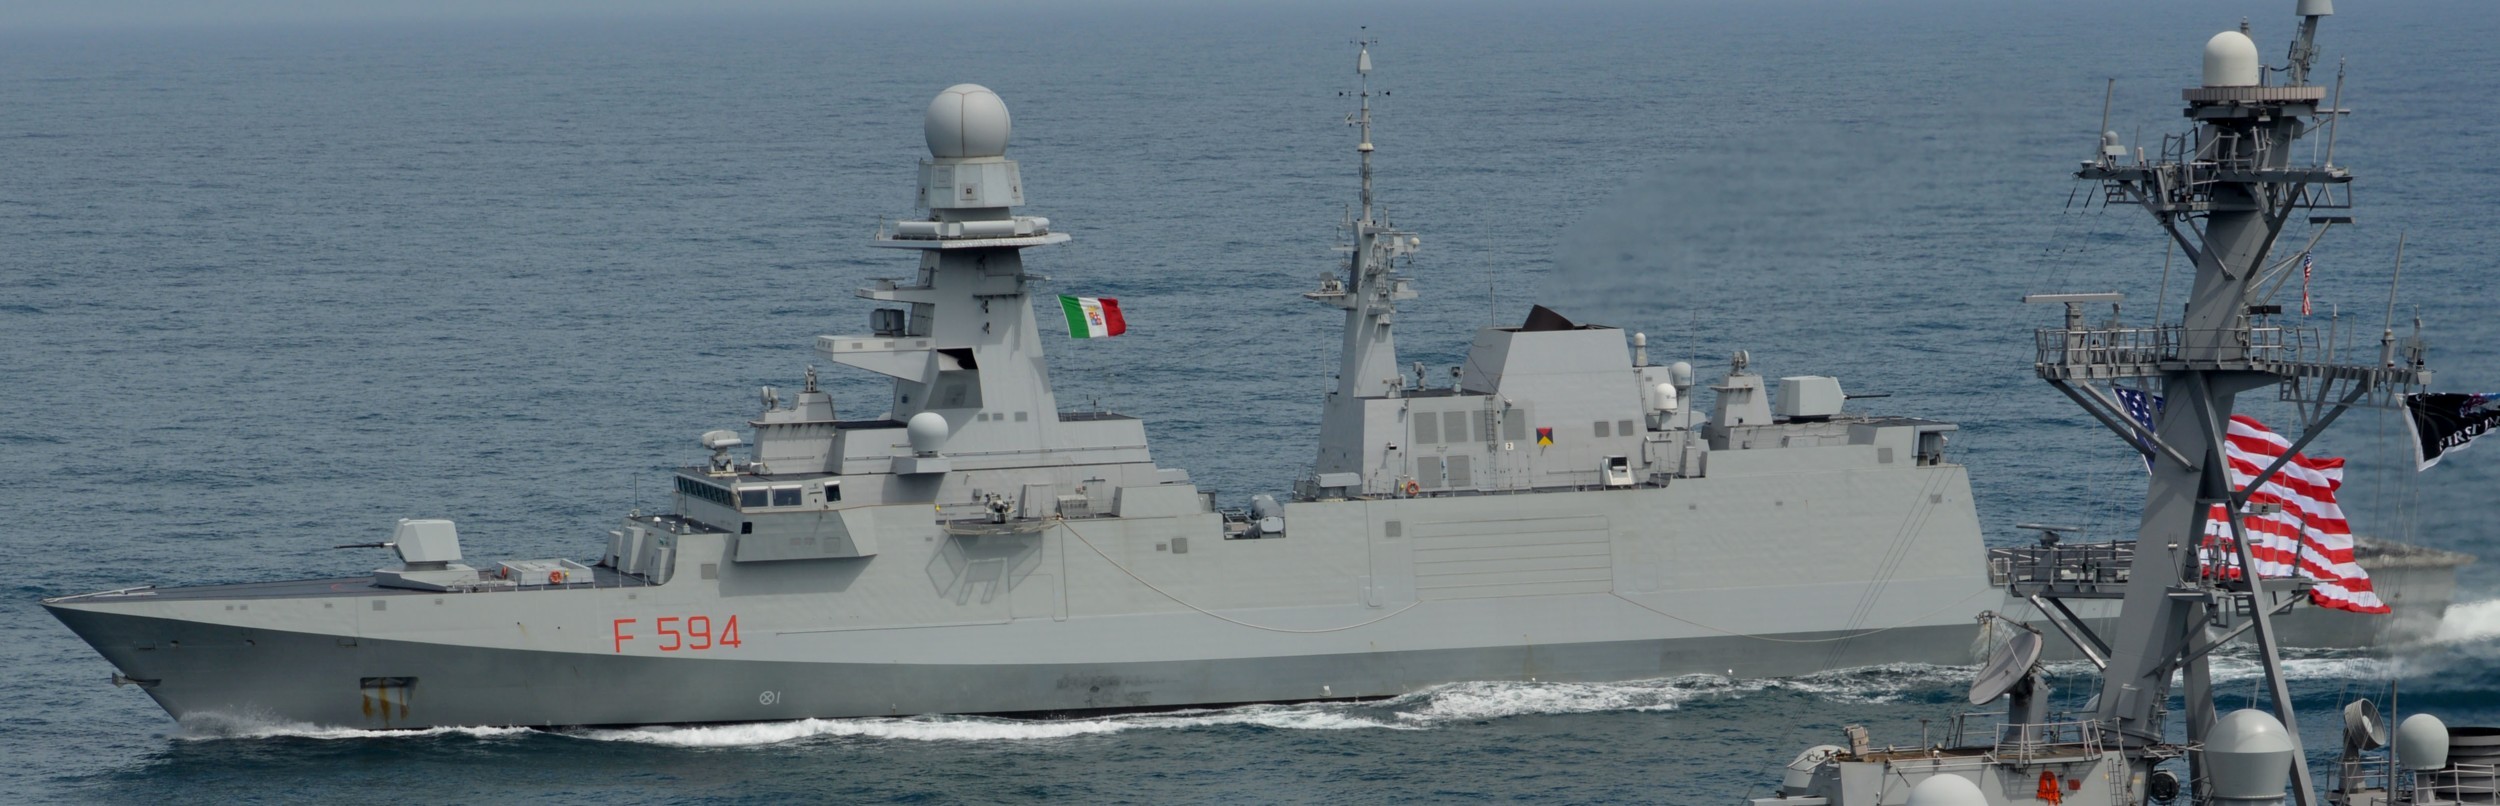 f-594 alpino its nave bergamini fremm class guided missile frigate italian navy marina militare 14